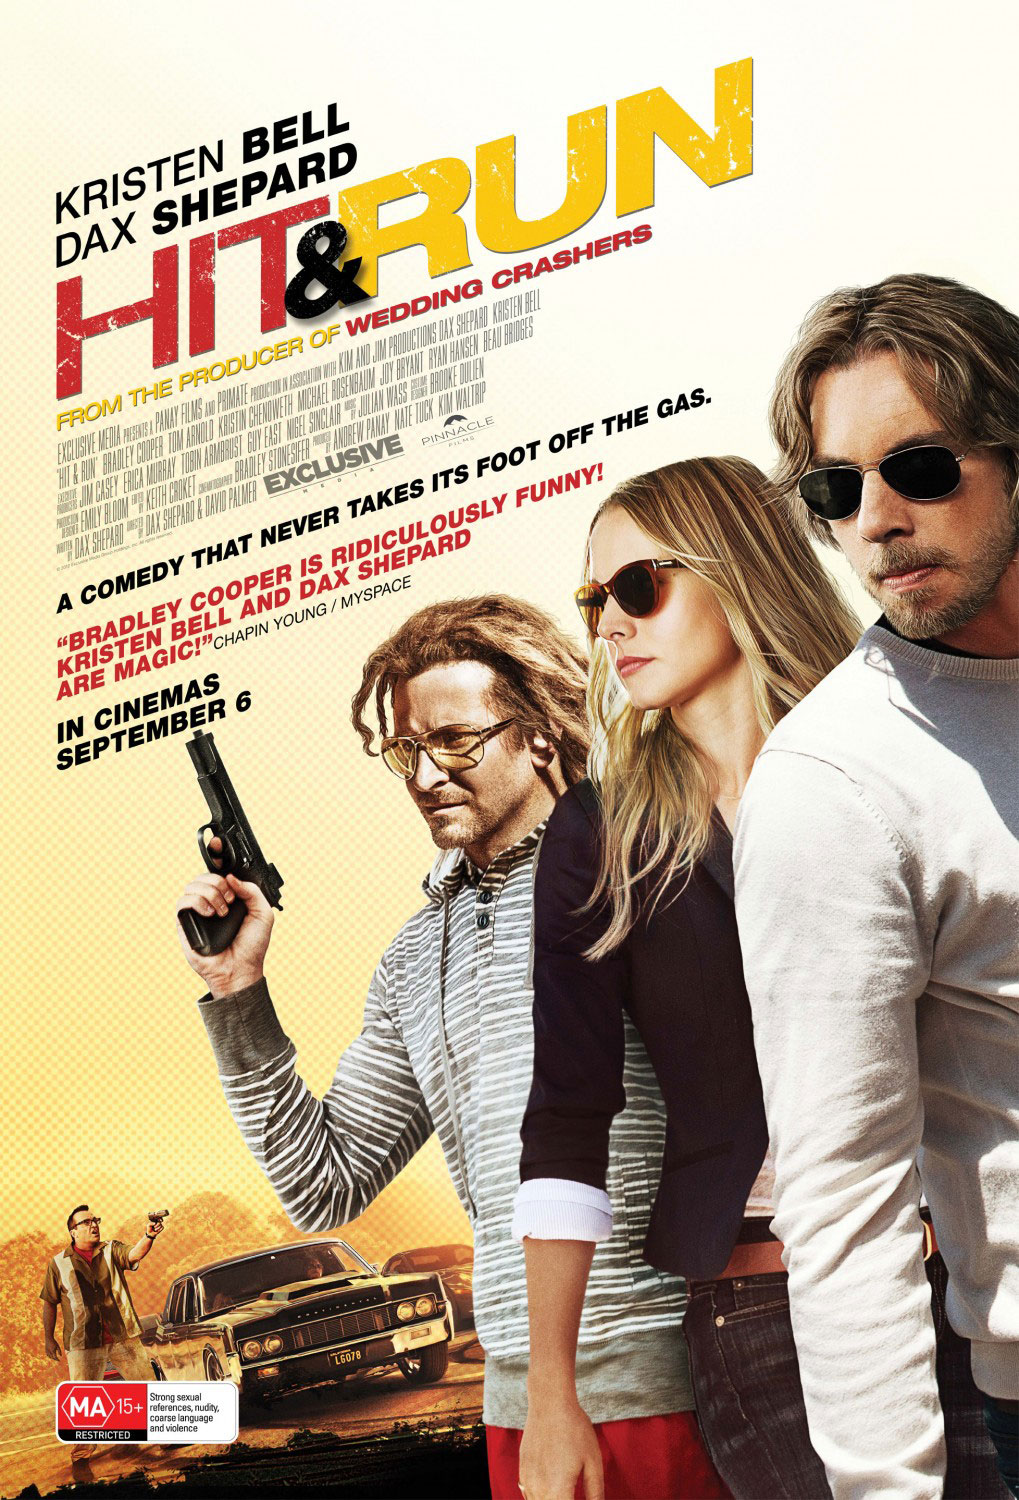 Hit and Run (2012)